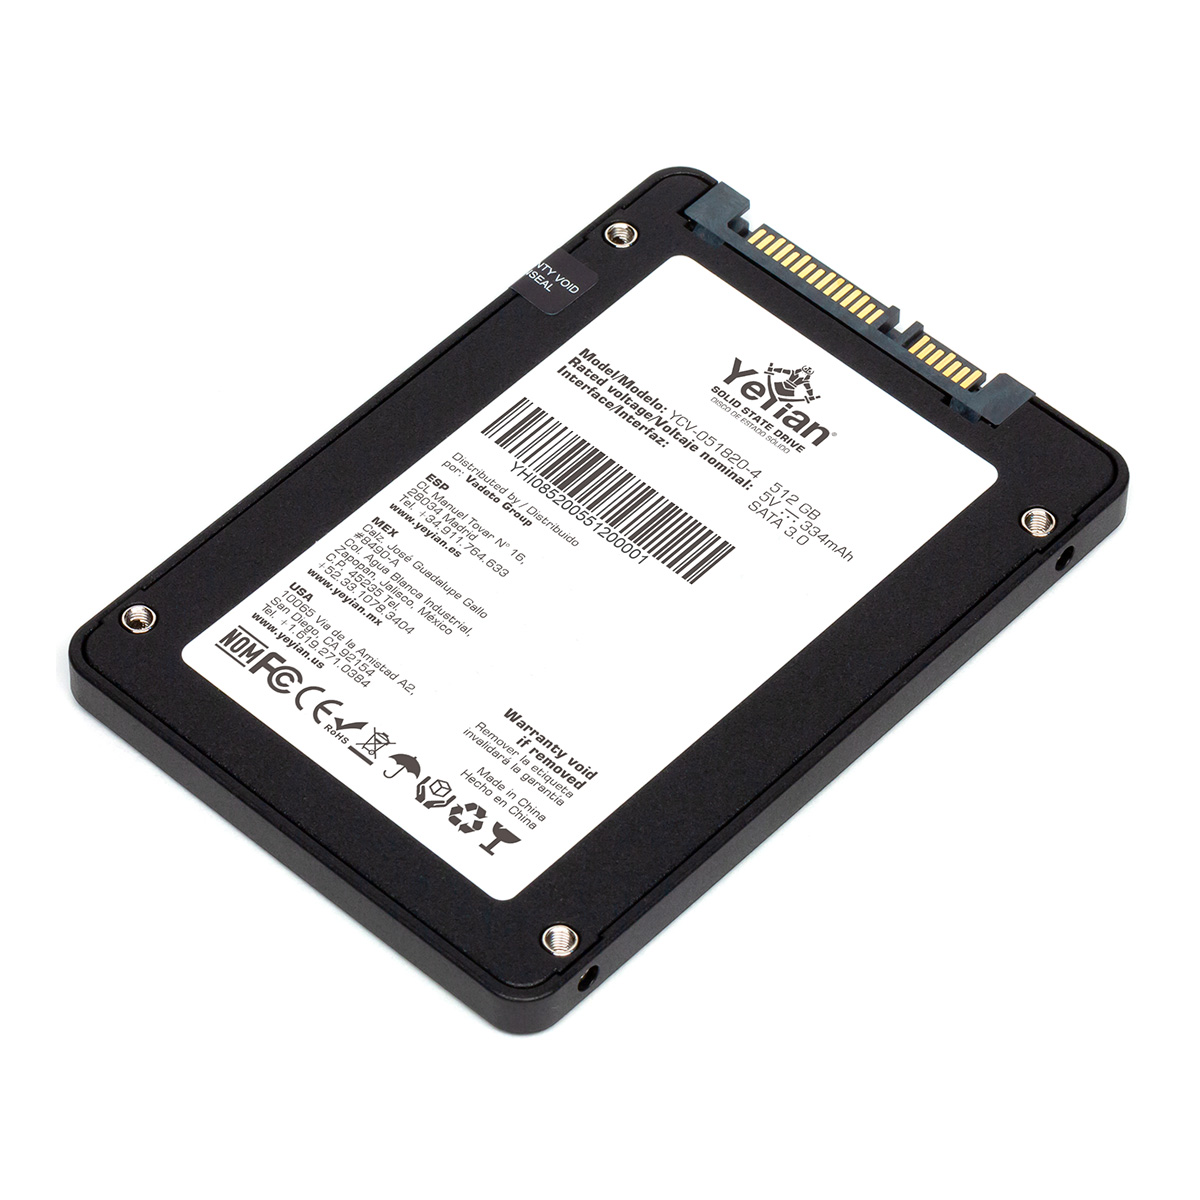 UNIDAD SSD YEYIAN YCV-051820-4 VALK, 512GB, SATA3, 470MB/S, 2.5